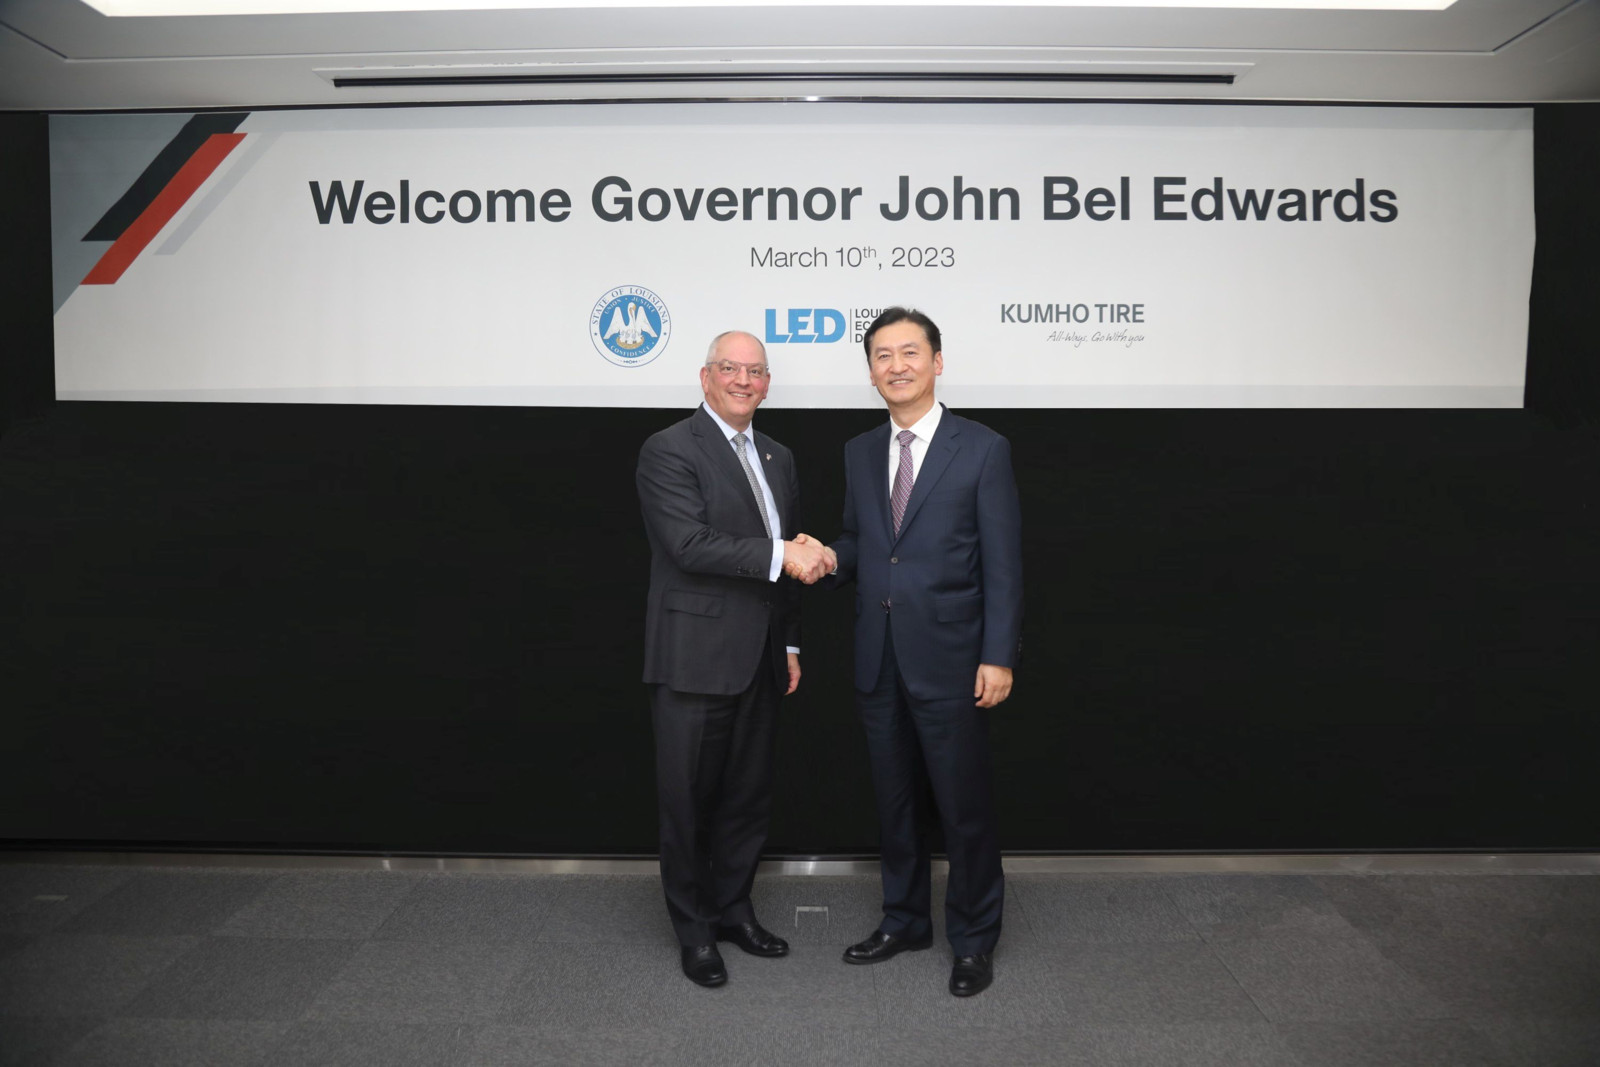  John Bel Edwards, Gouverneur des US-Bundesstaats Louisiana, und Kumho CEO Il Taik Jung.